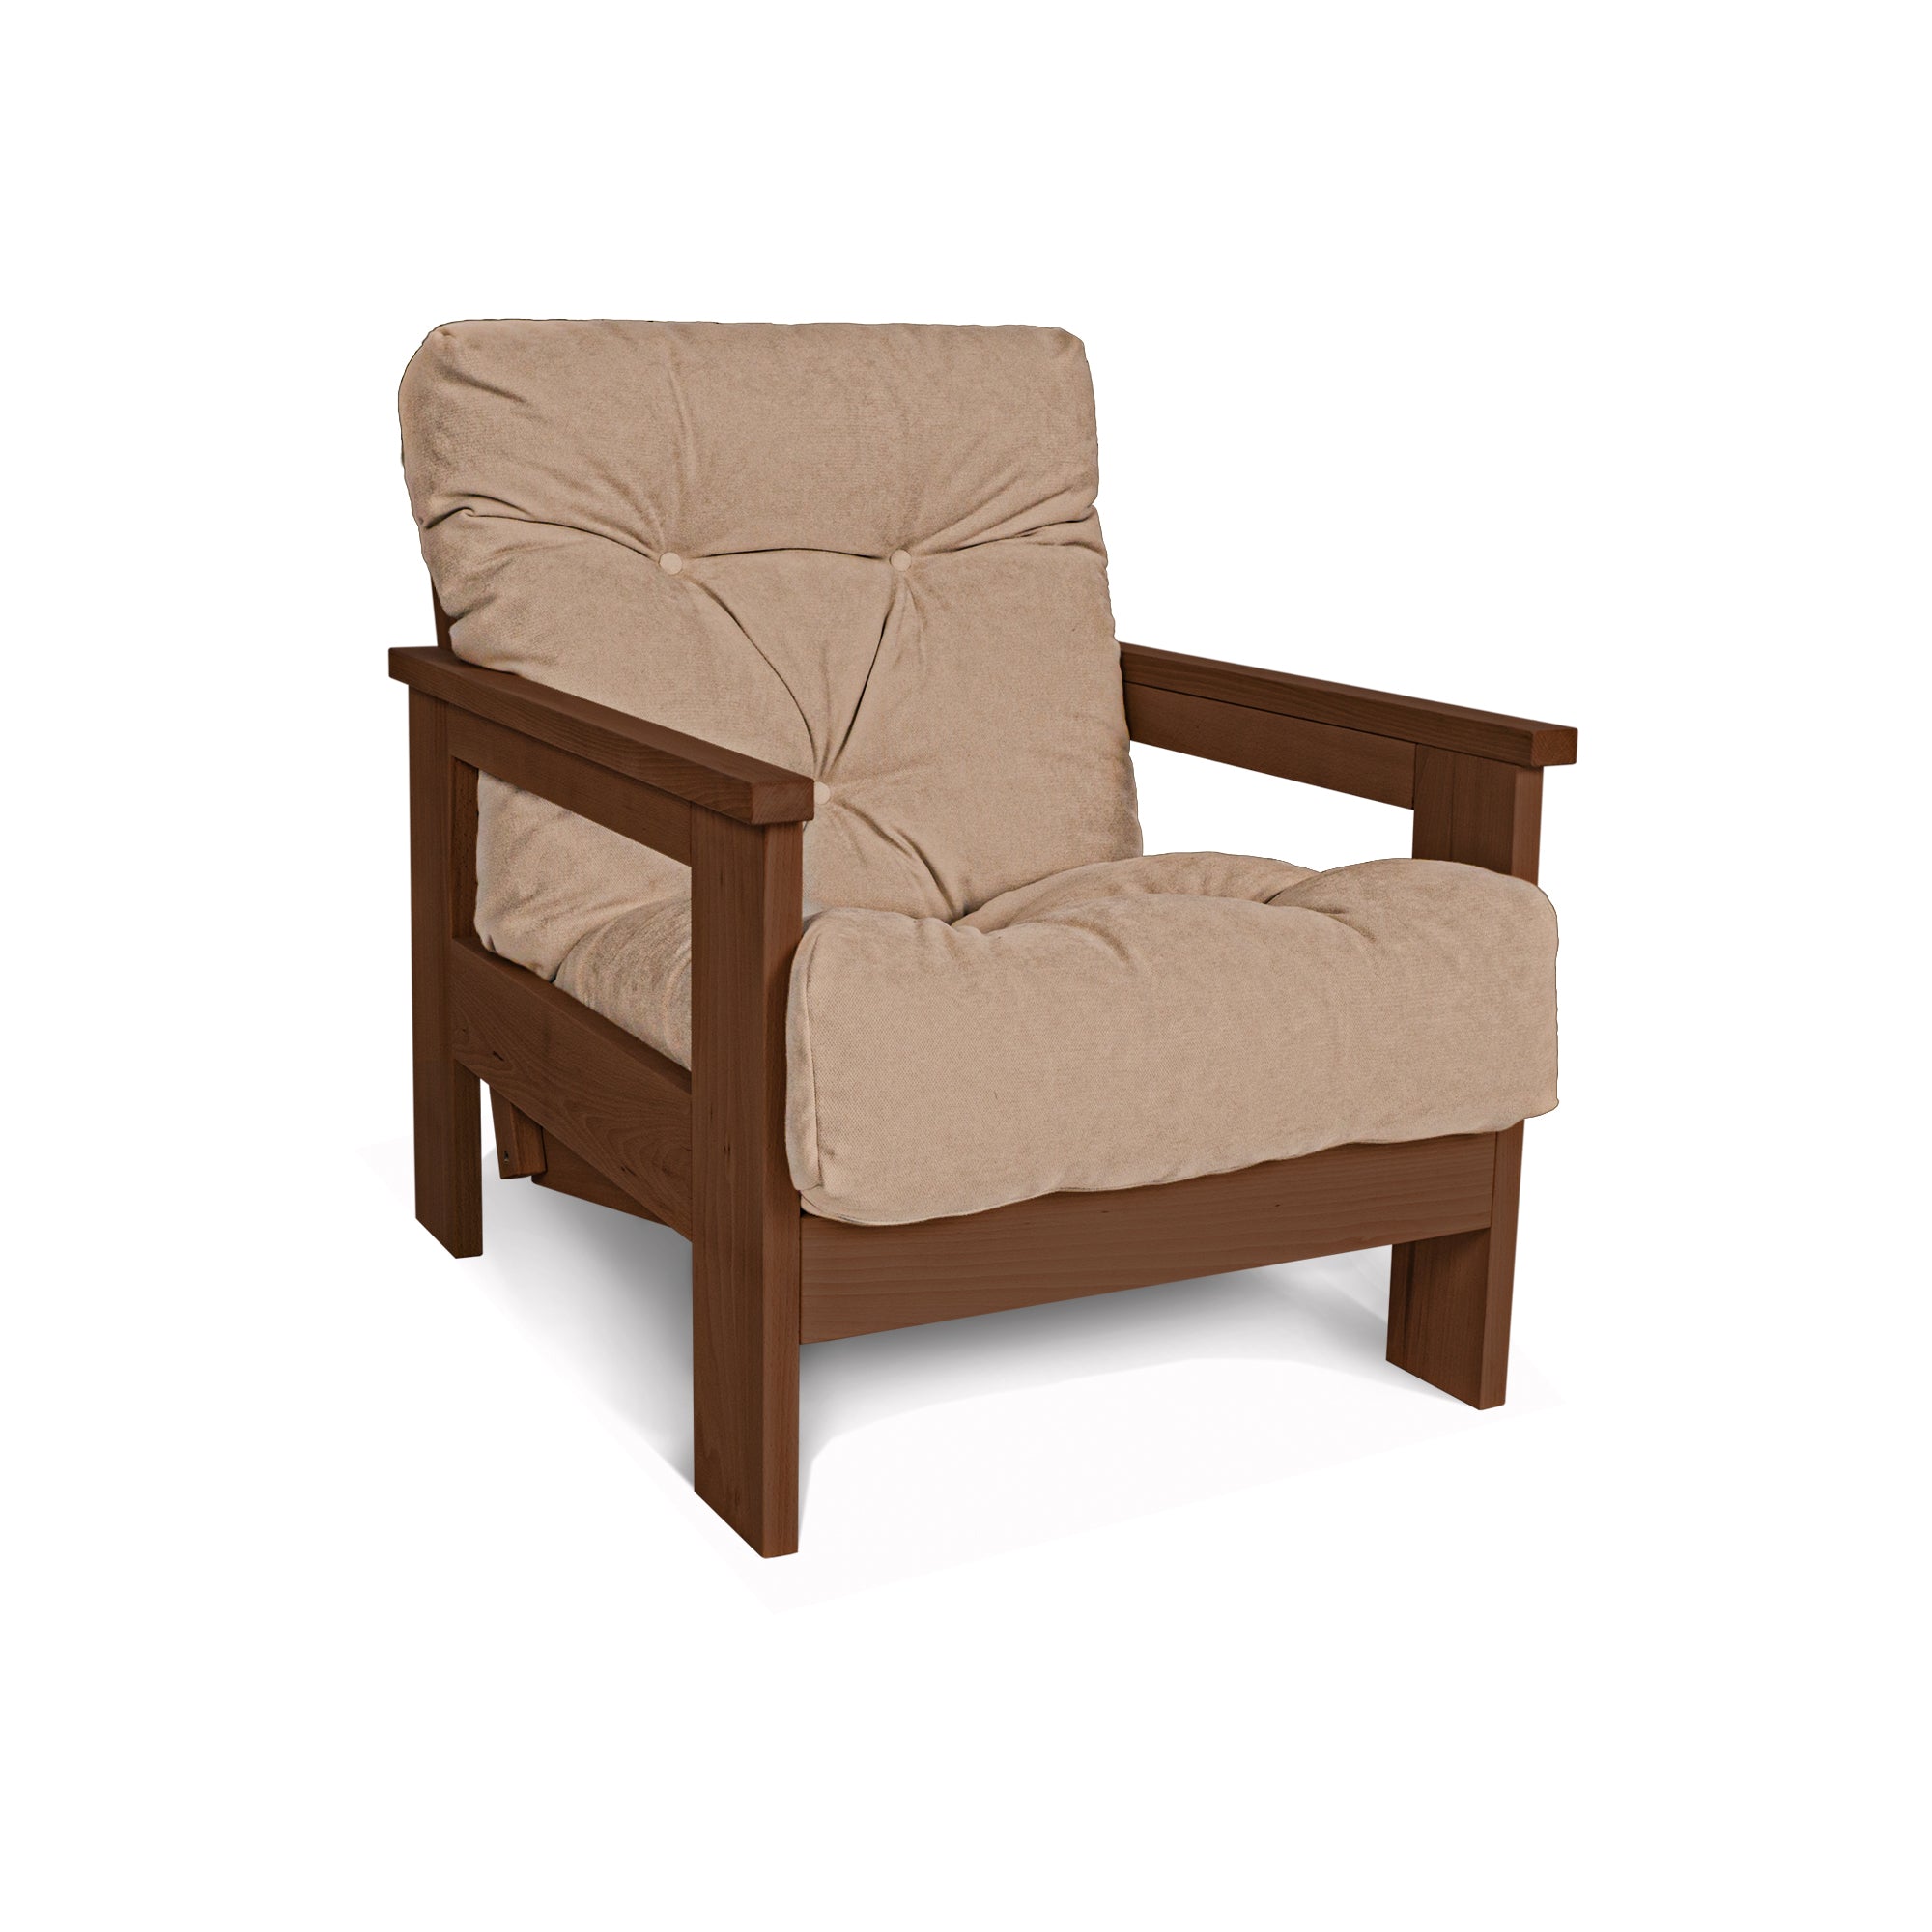 MEXICO Armchair, Beech Wood Frame, Walnut Colour-beige fabric